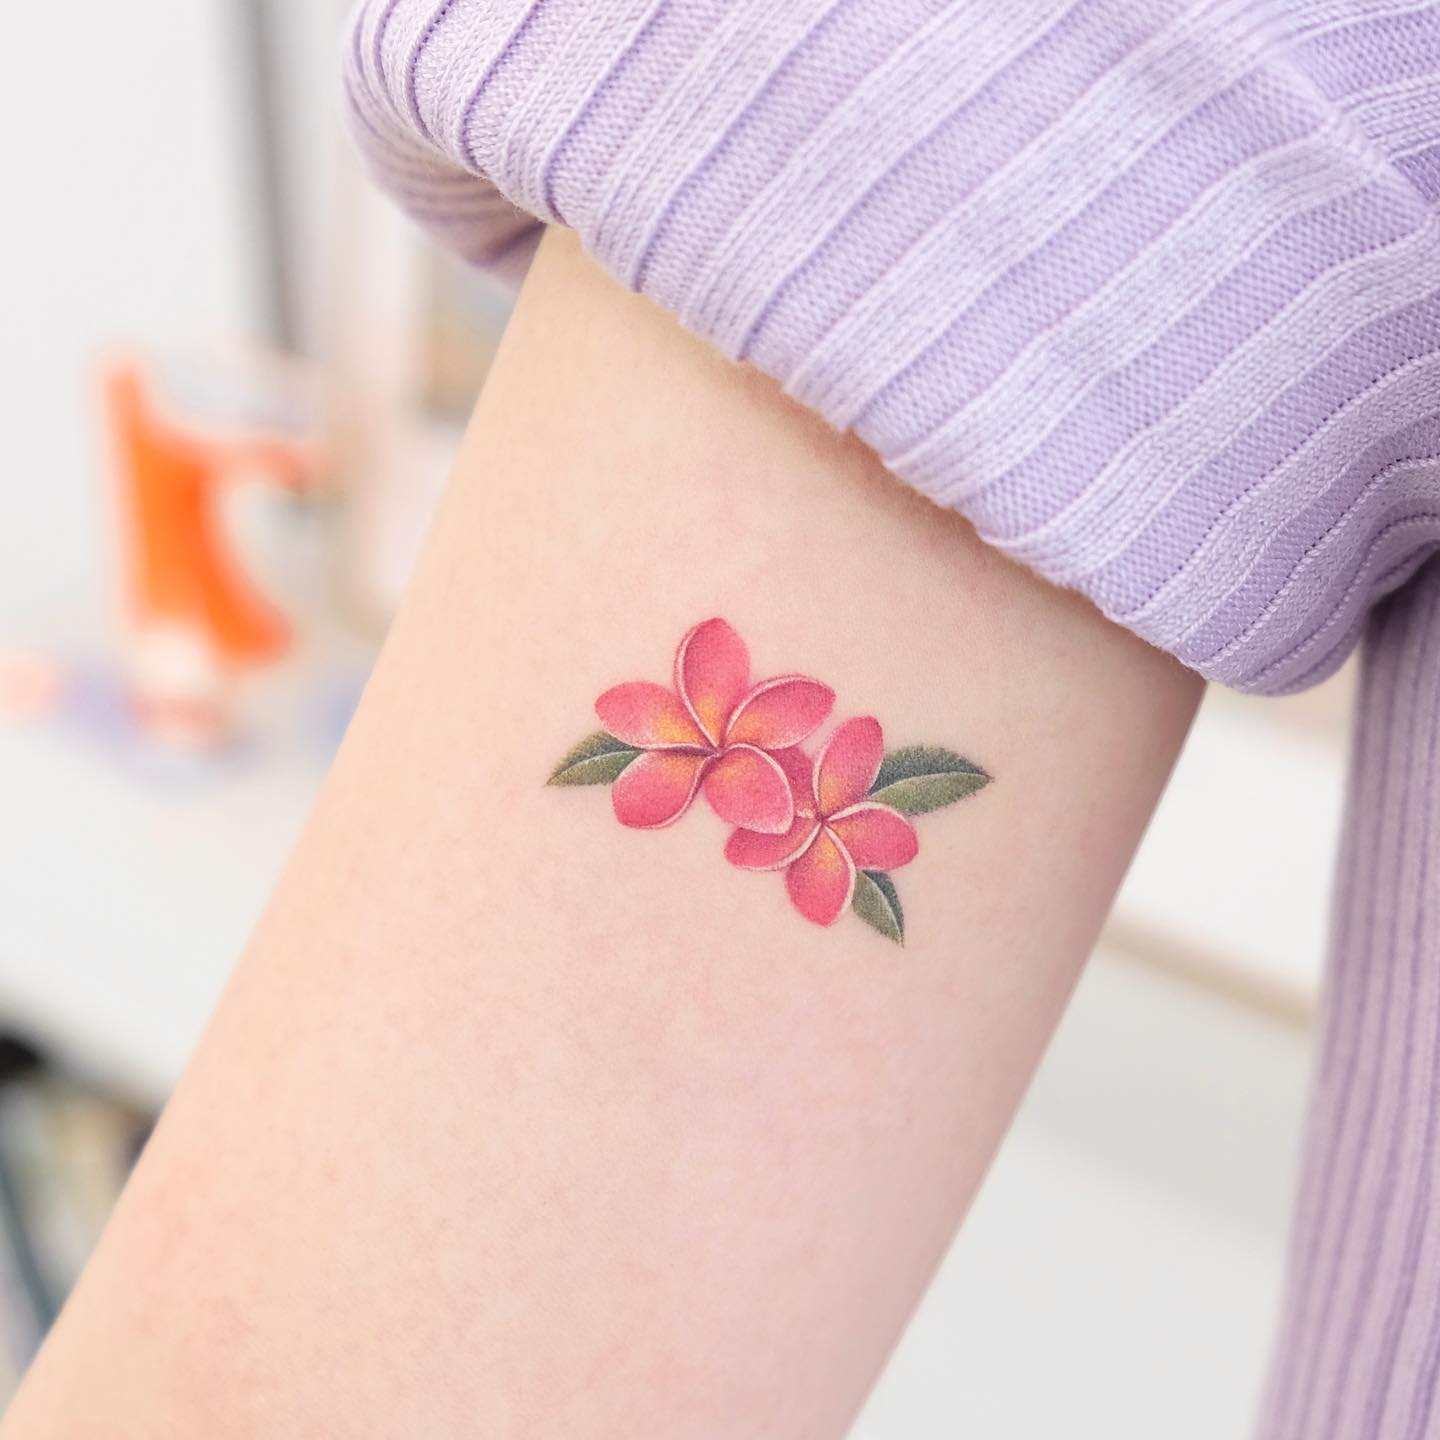 tatuaż z kwiatem plumerii